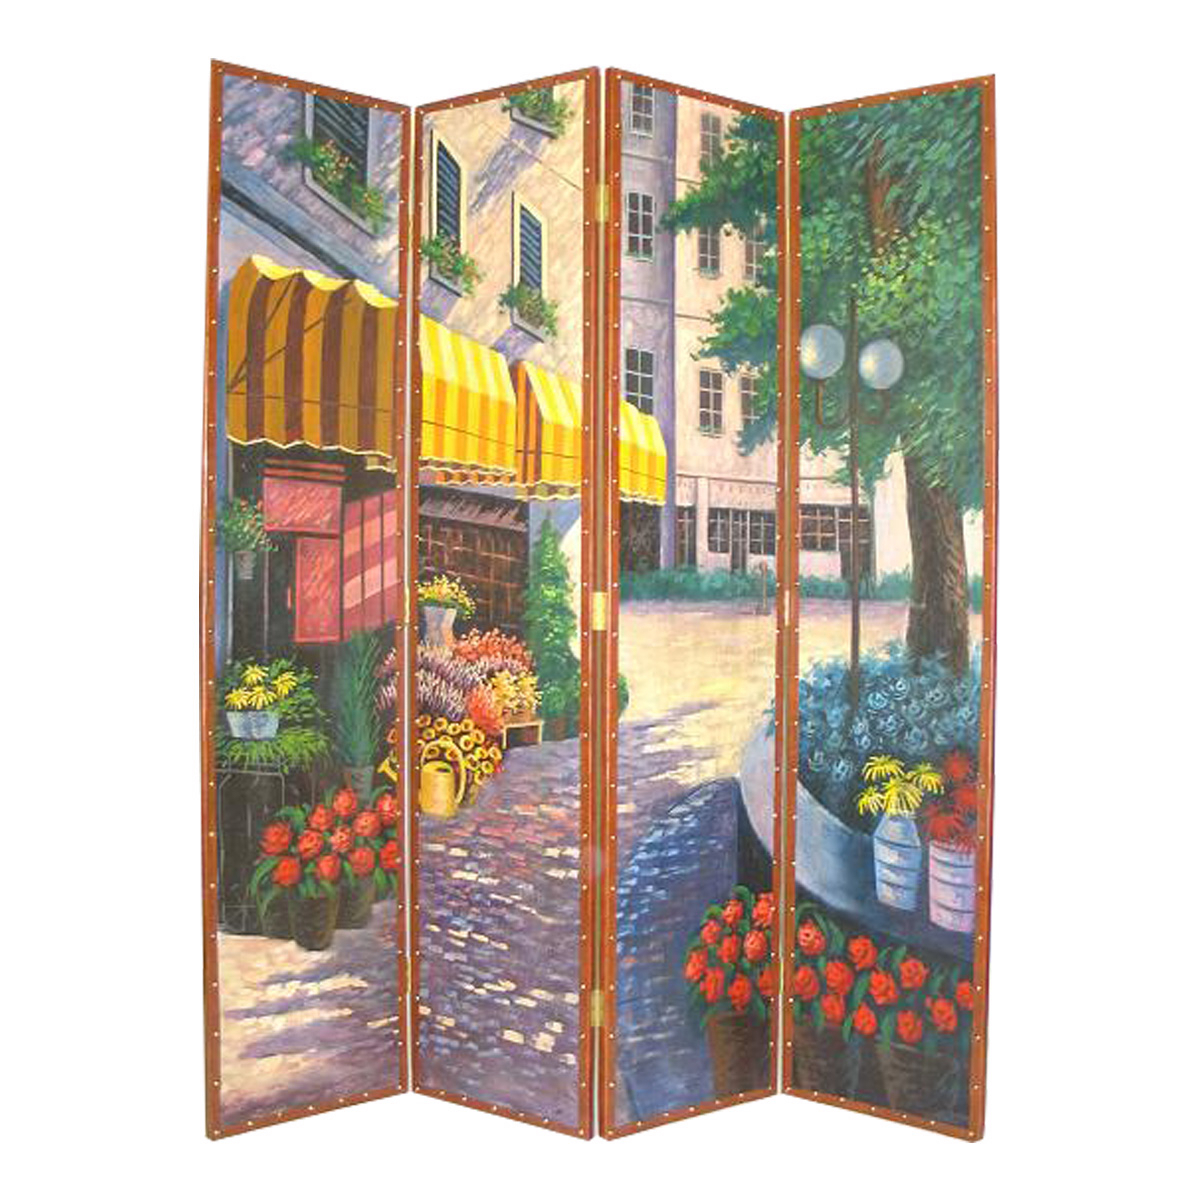 Leatherette Wooden 4 Panel Room Divider With Flower Market Theme,Multicolor- Saltoro Sherpi